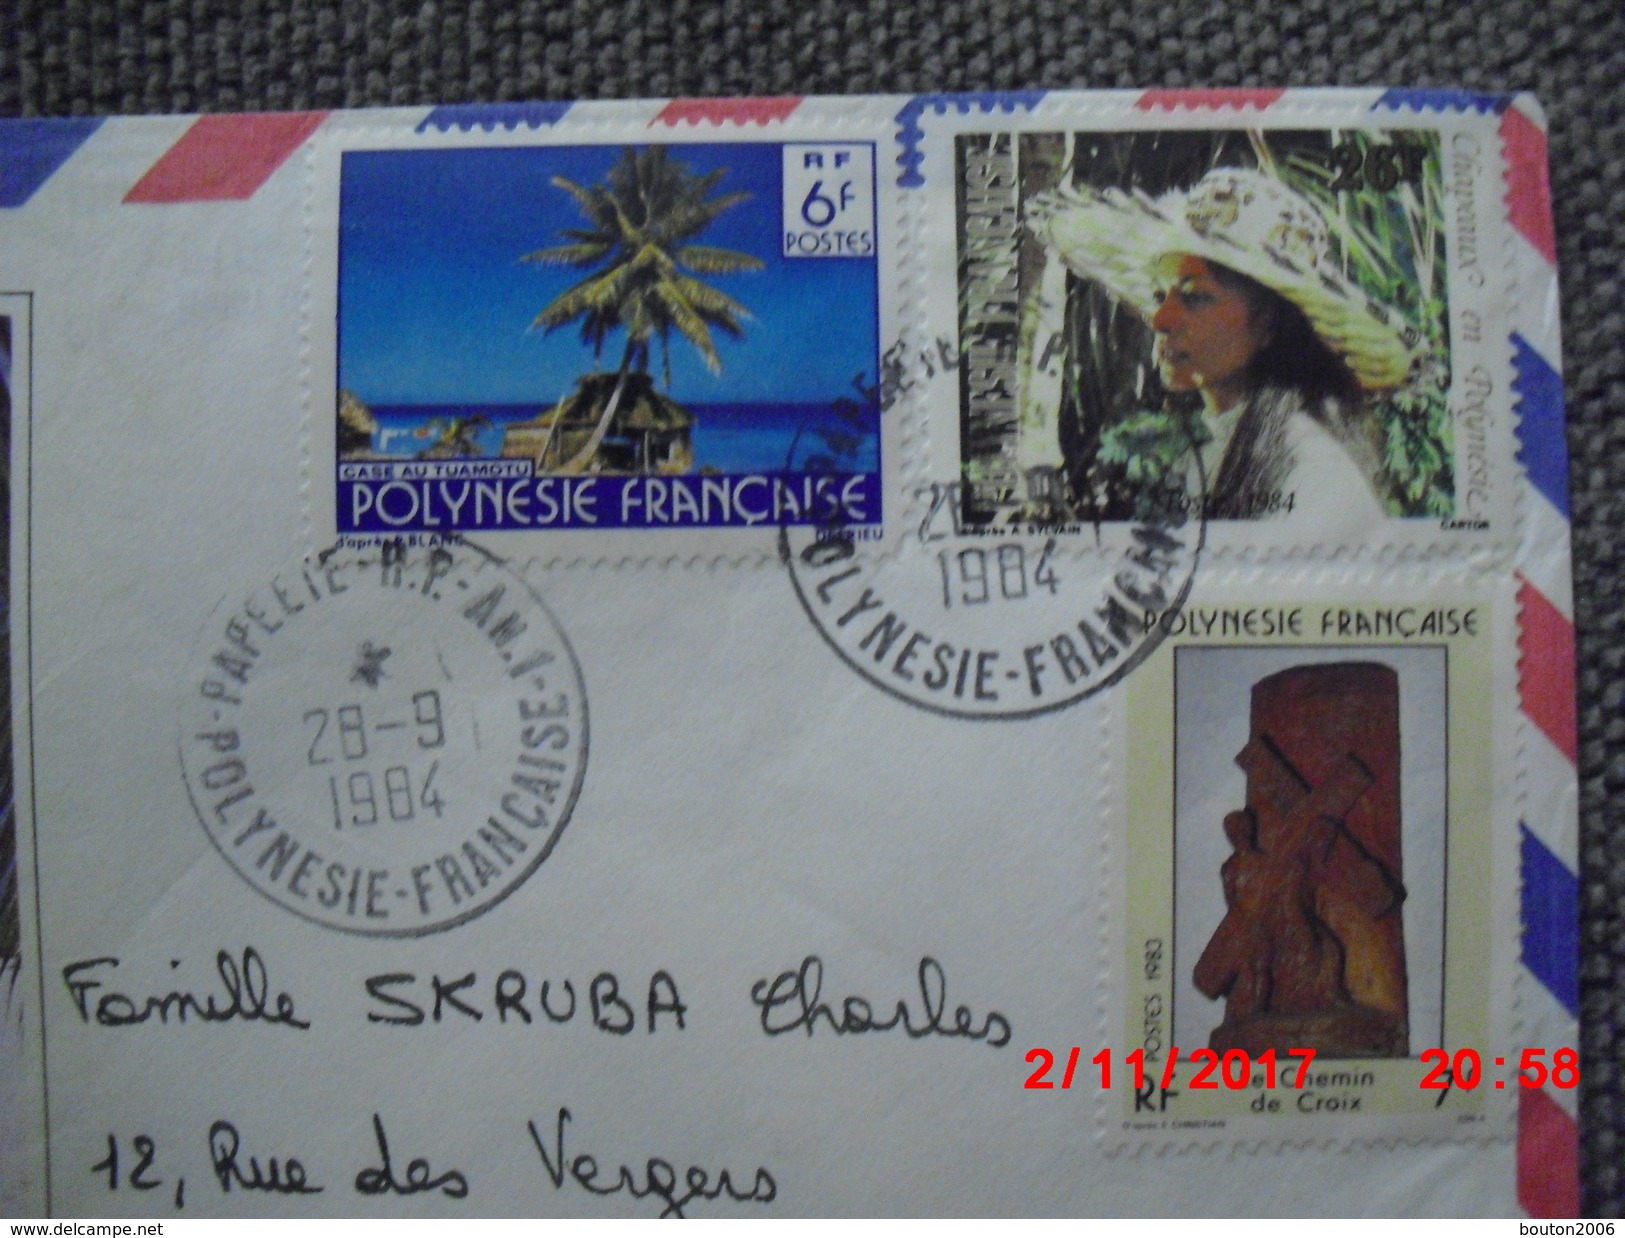 Timbres Polynésie Française 1984 Sur Enveloppe - Used Stamps